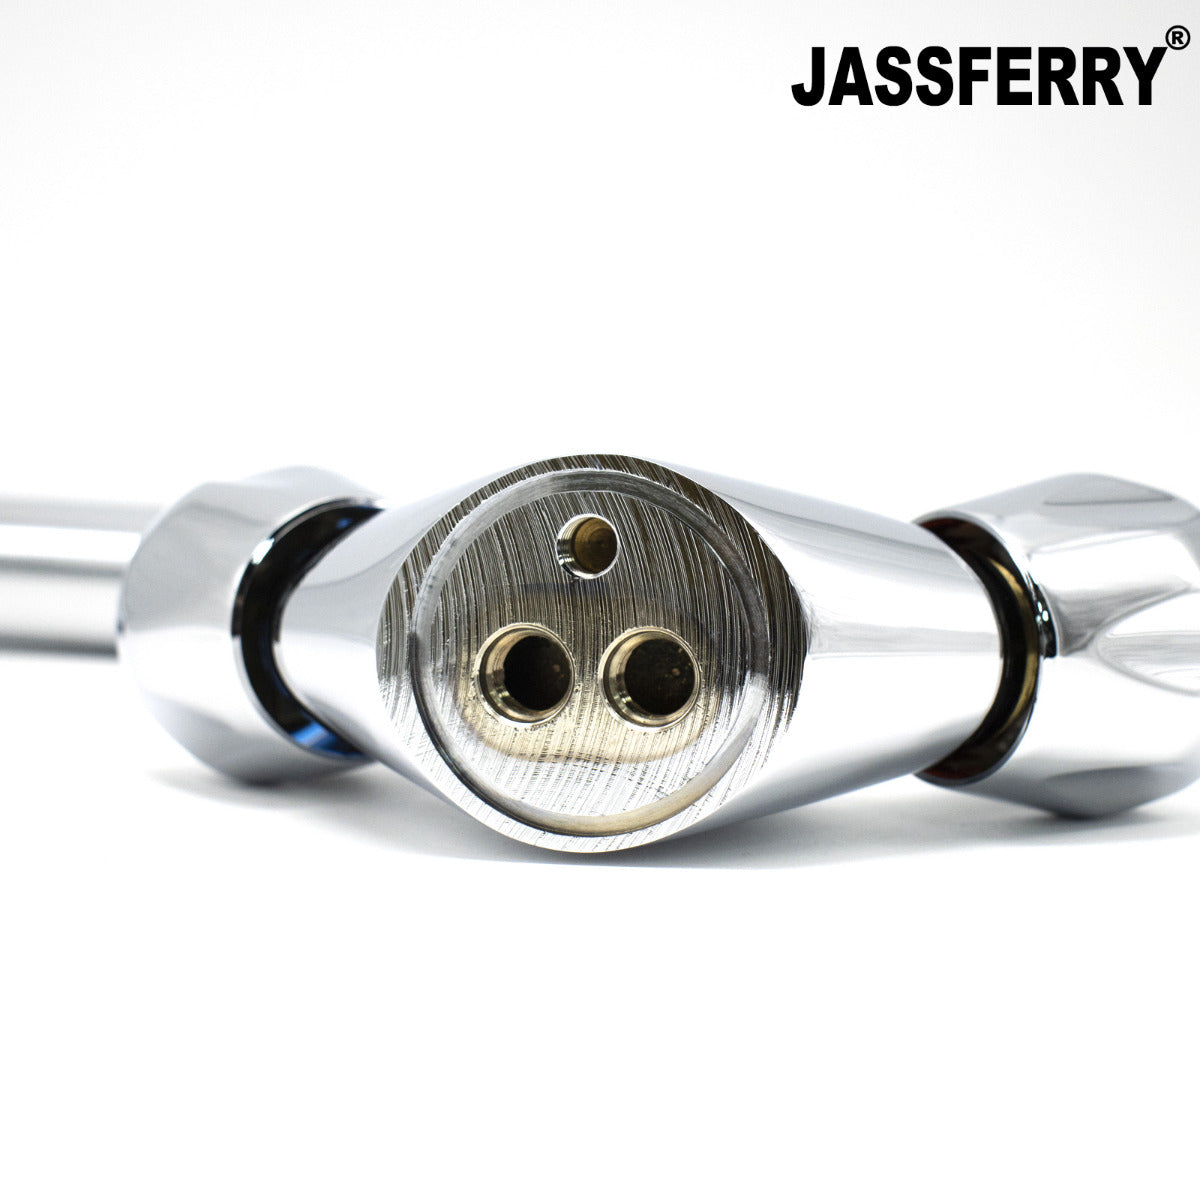 JassferryJASSFERRY Traditional Kitchen Mixer Tap Chrome Polish Dual Lever Swivel SpoutTaps